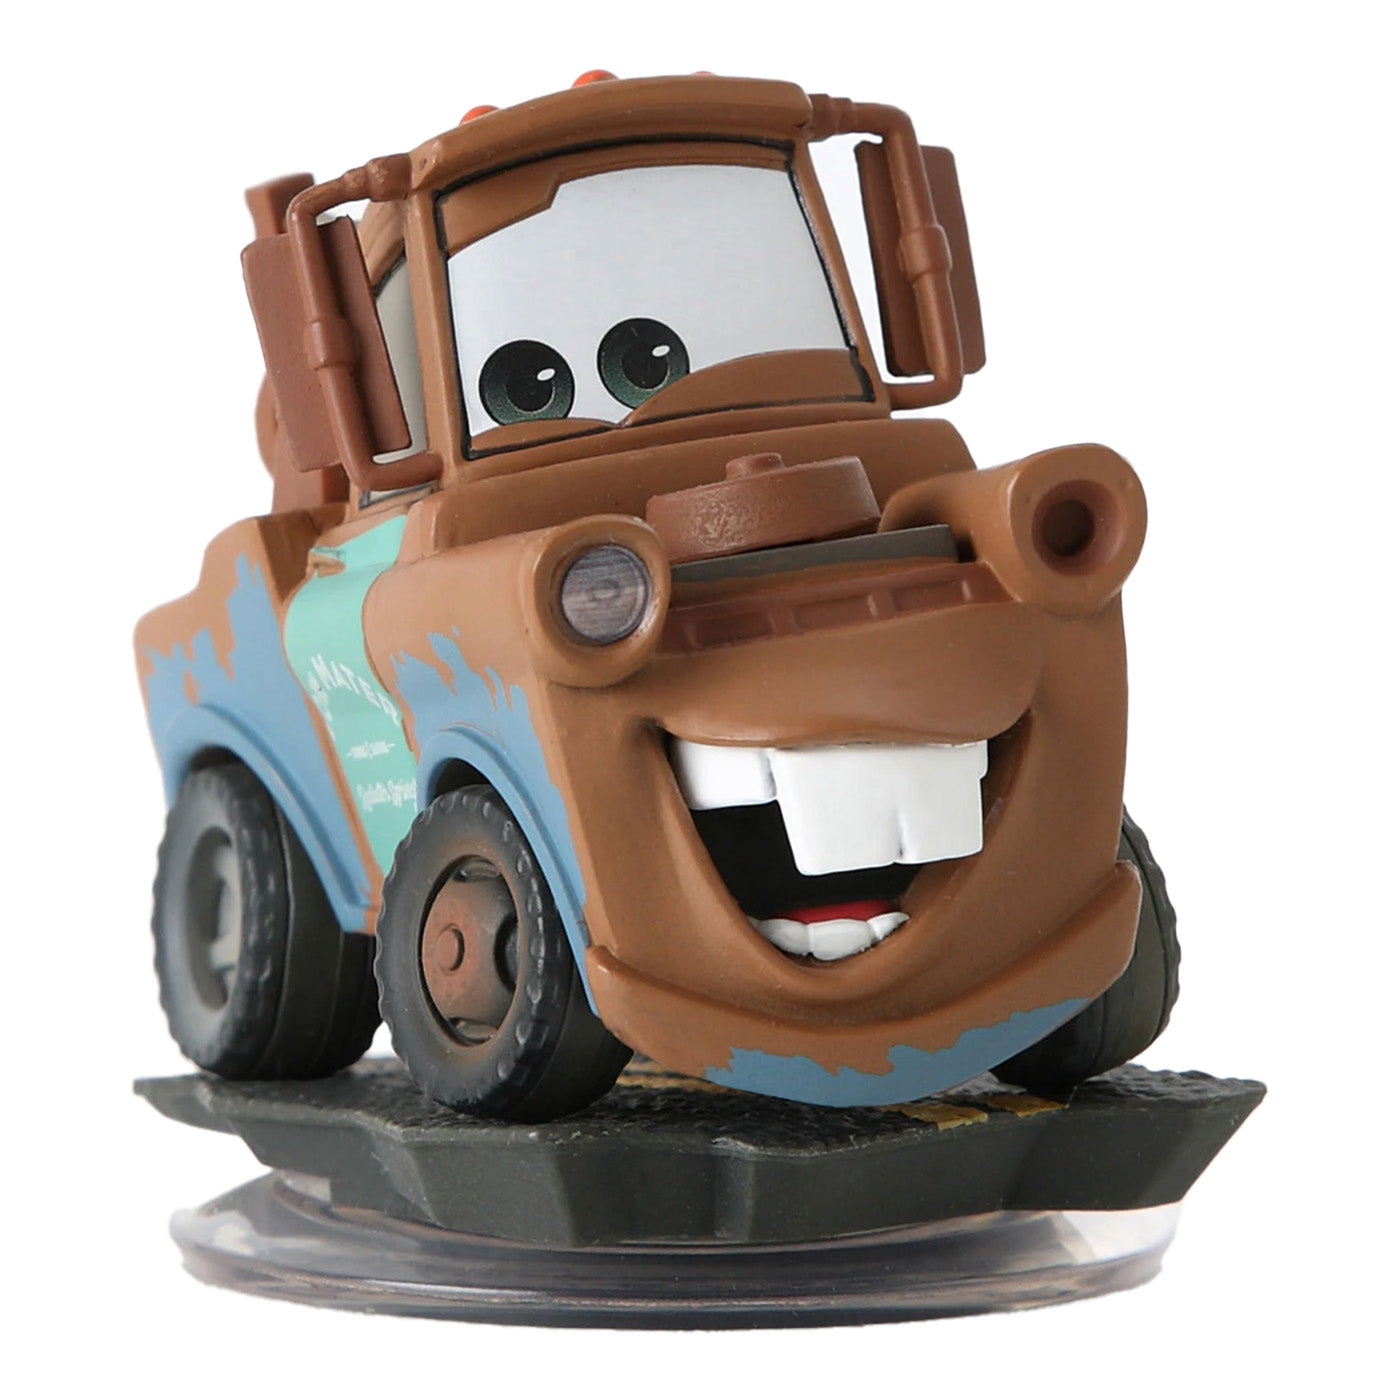 Disney Infinity 1.0 Character: Mater